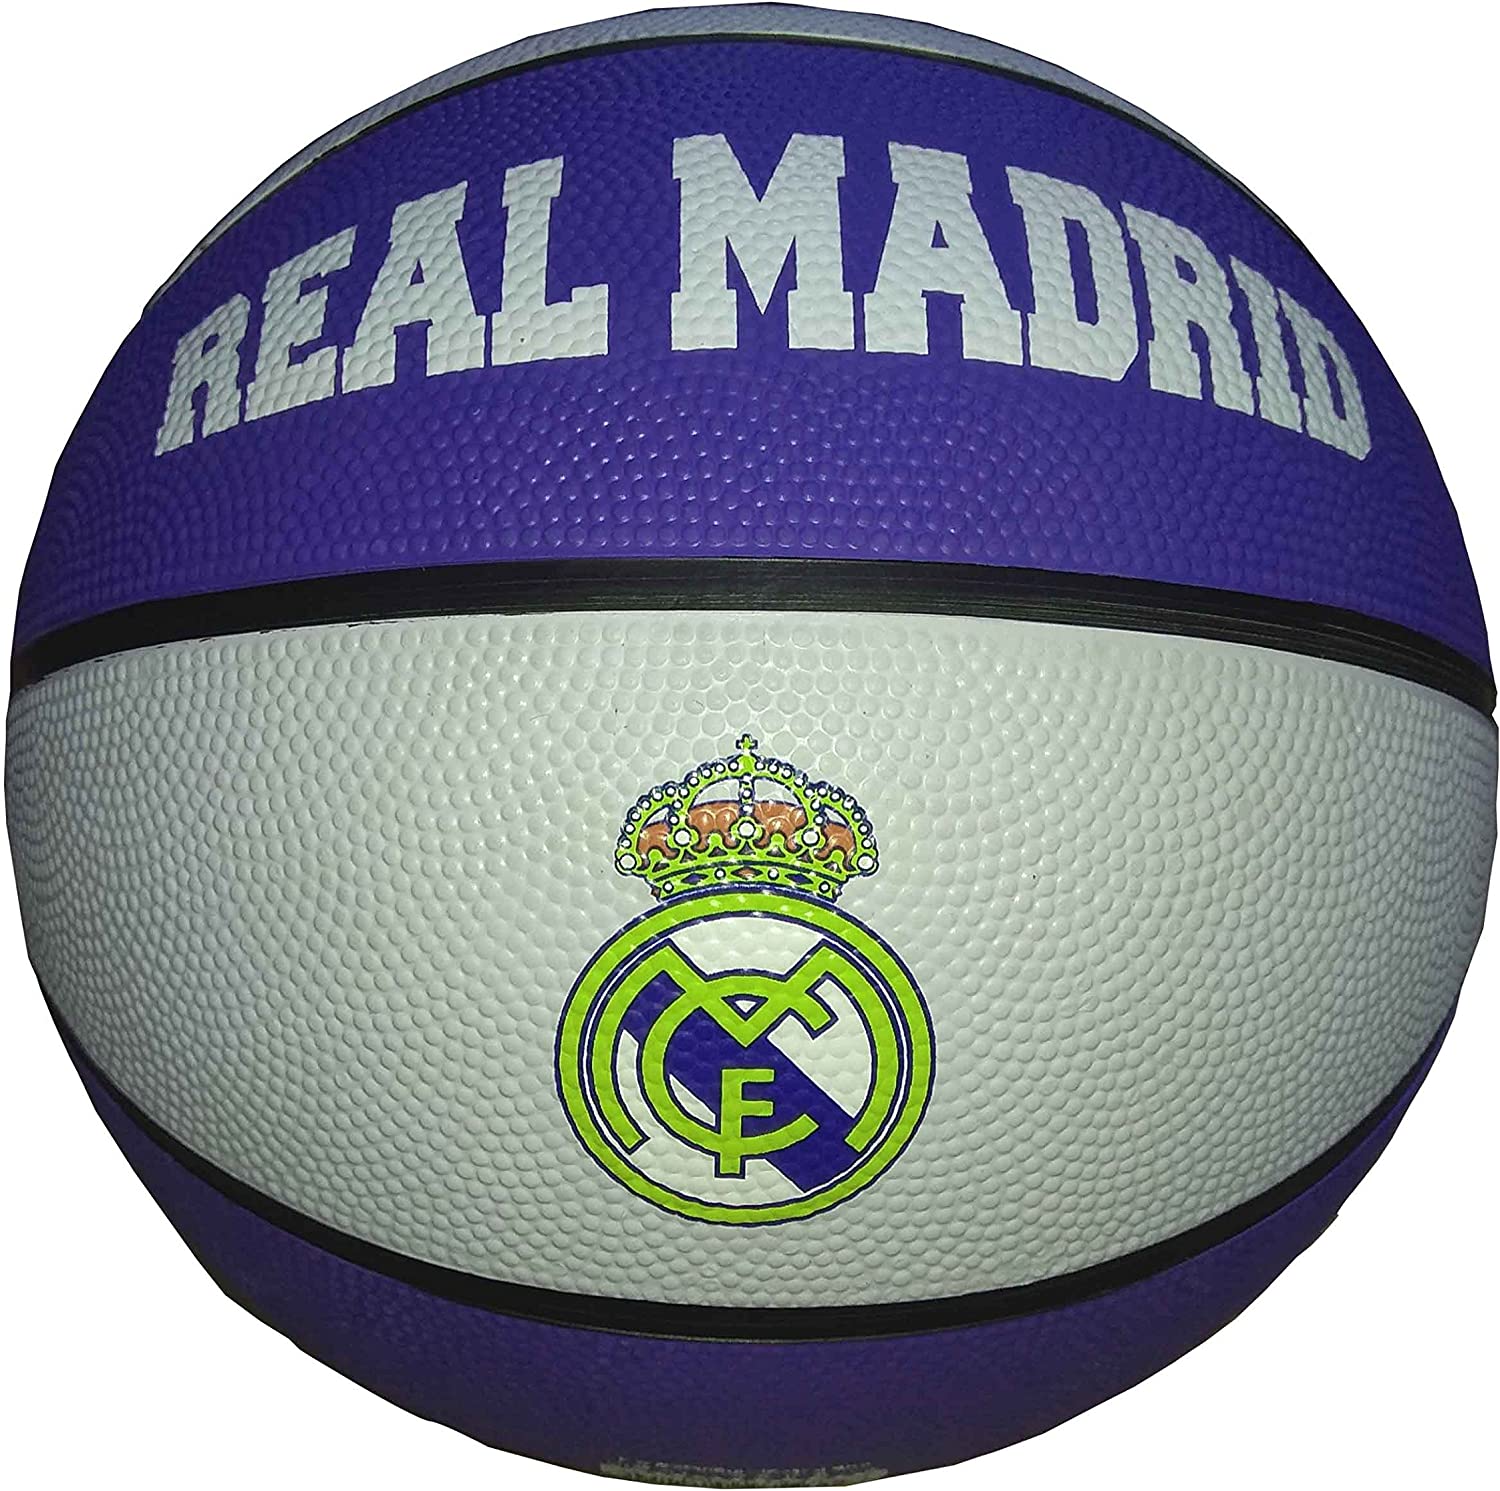 Real Madrid Baloncesto